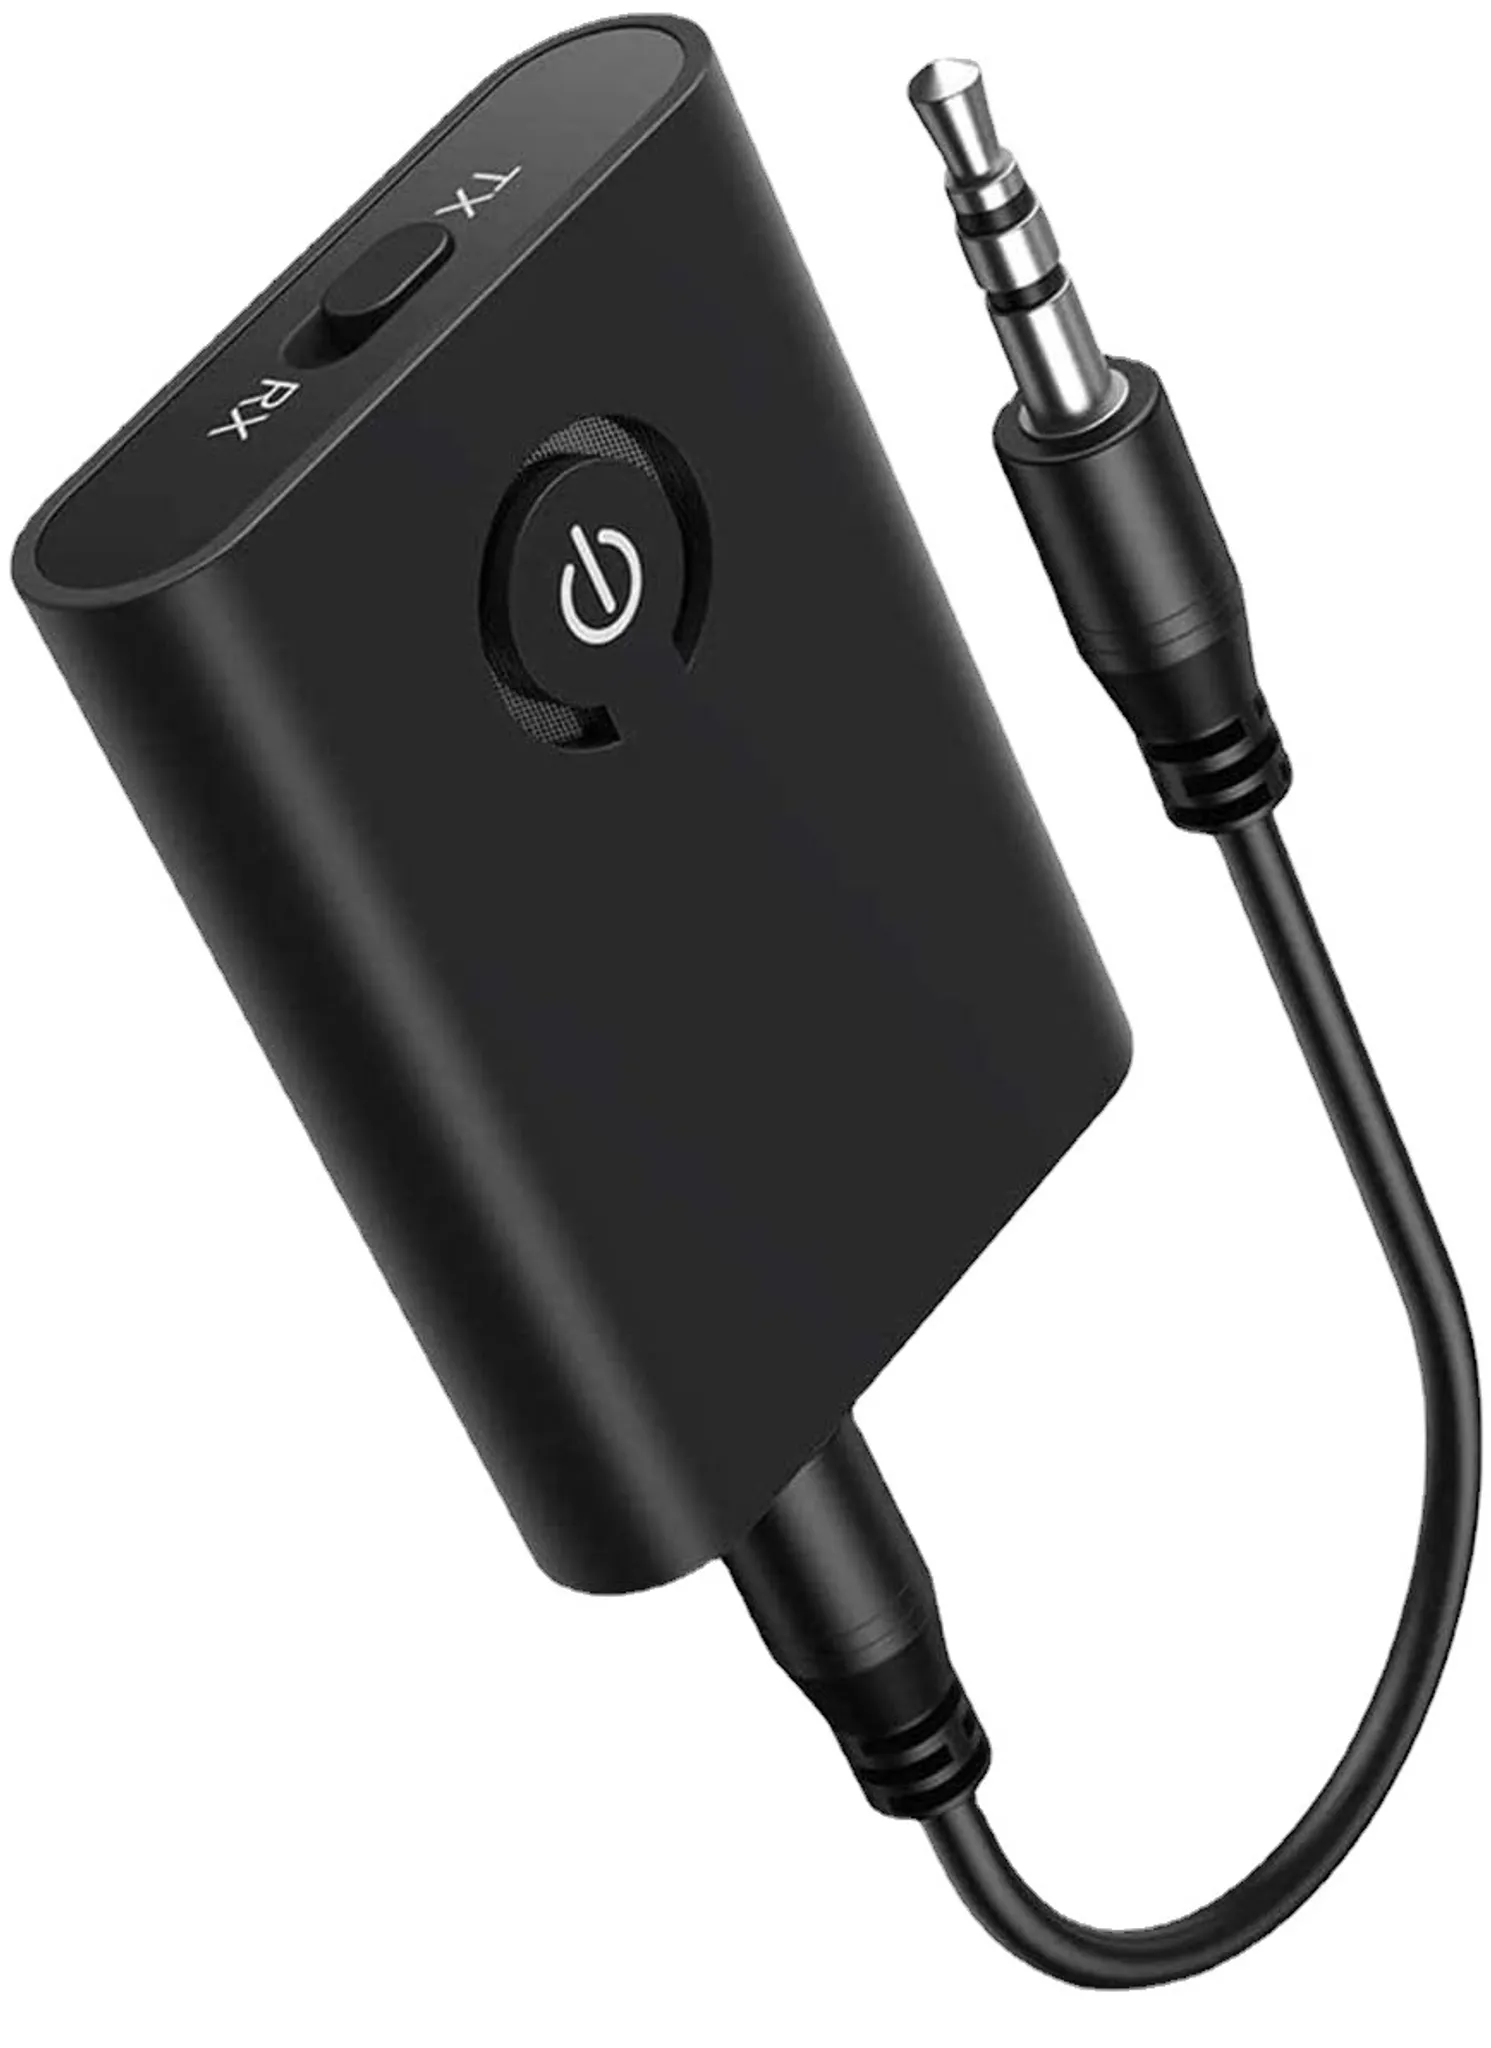 Kaufe 4-in-1-USB-Bluetooth-5.0-Dongle-Adapter, Empfänger, Sender